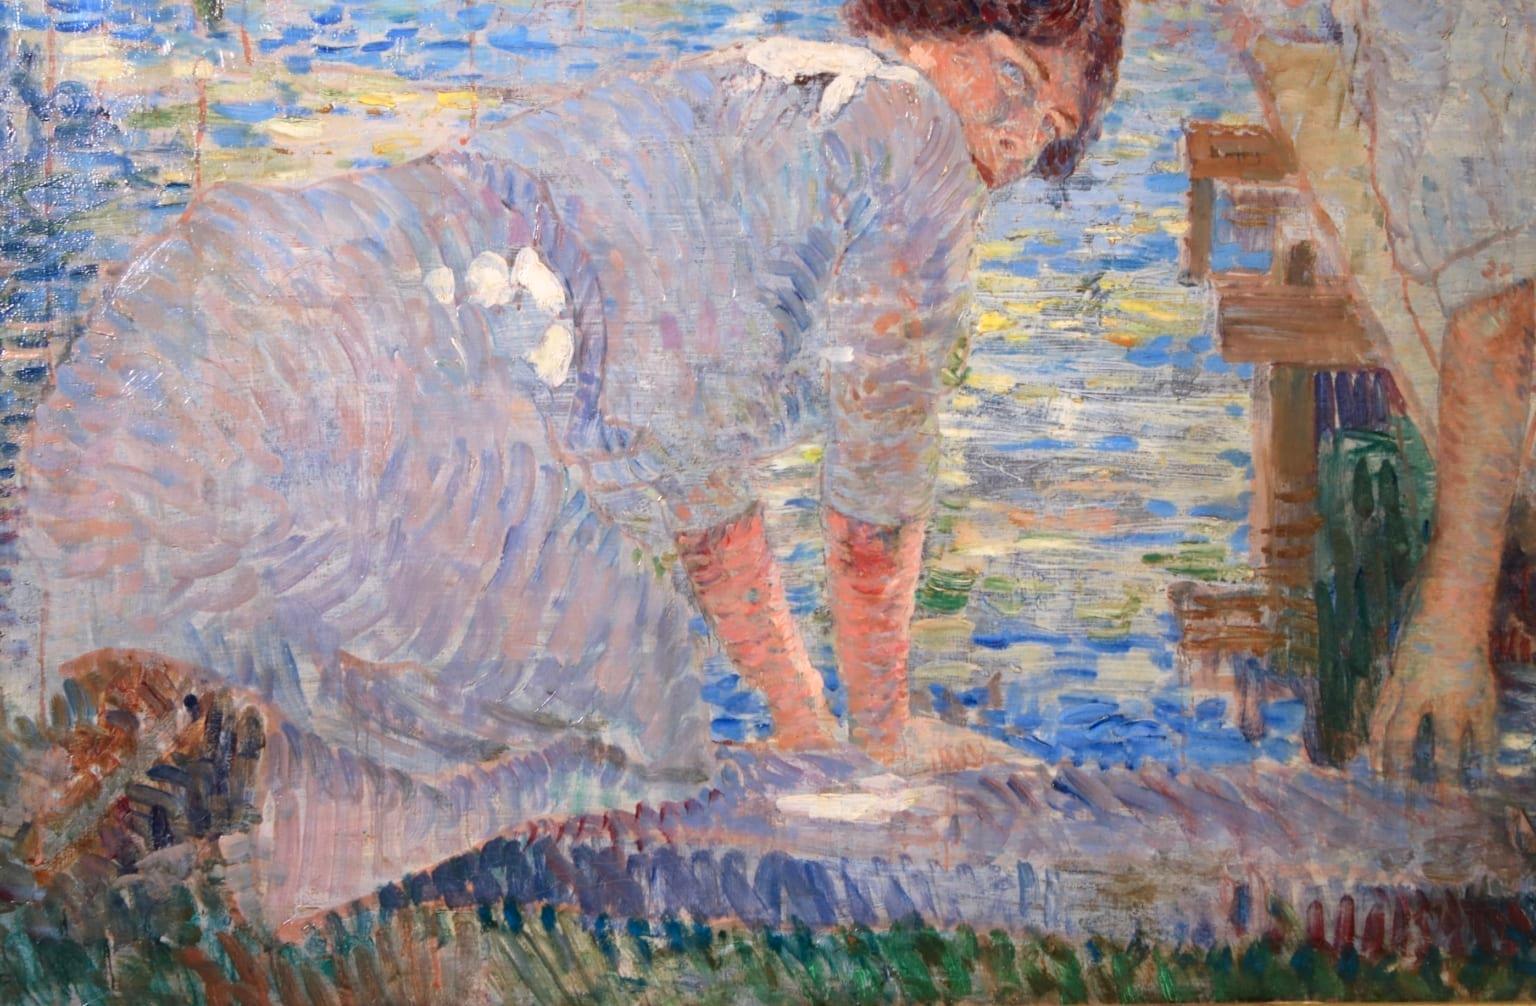 Lavandieres - Impressionist Oil, Women by River in Landscape by Paul Villiers 4